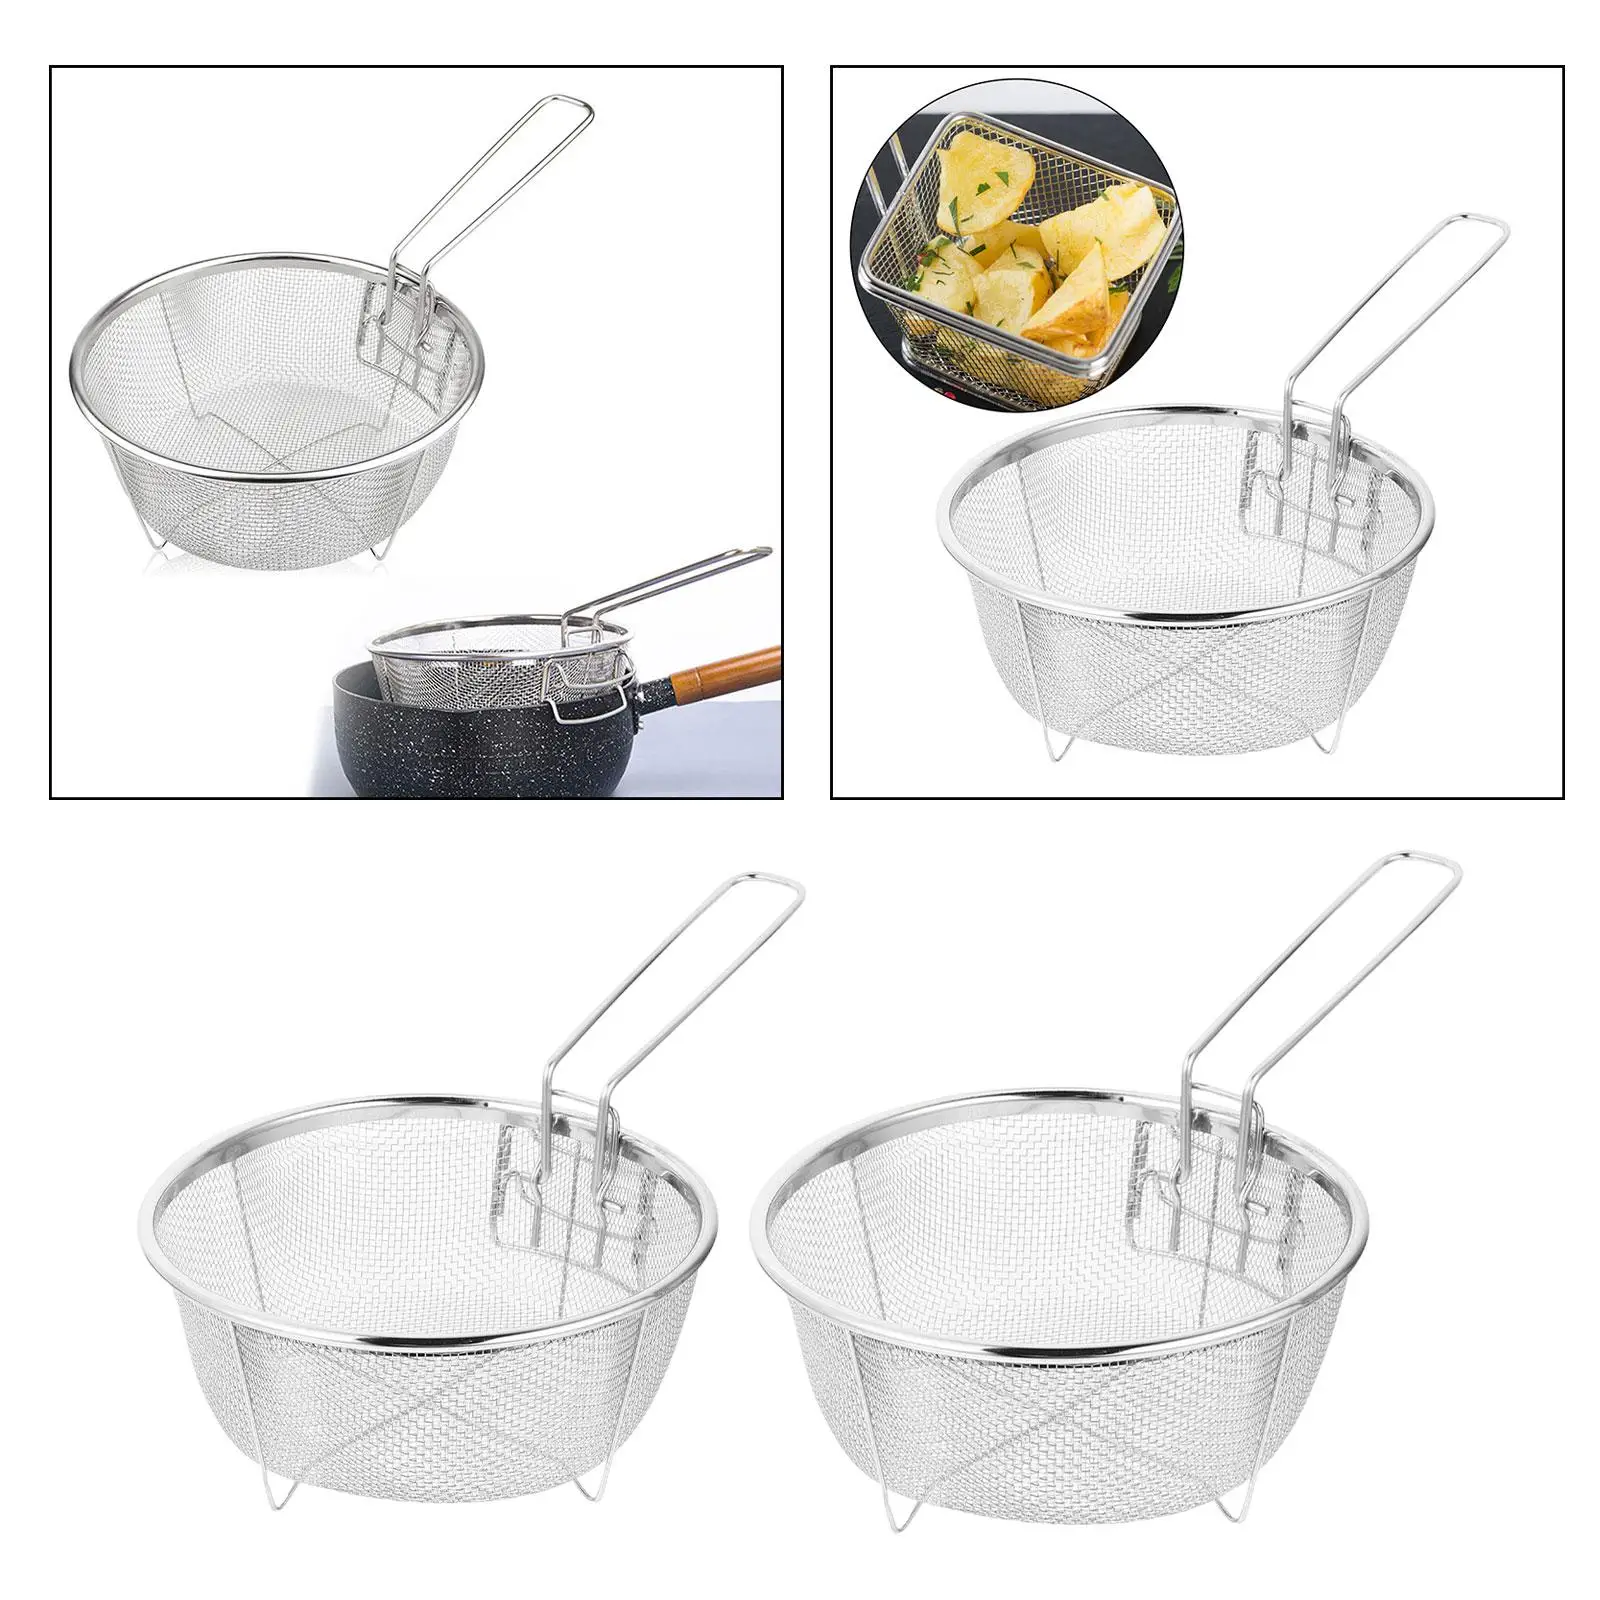 Mesh Skimmer Strainer Dumplings Cooking Strainer Rinsing Noodle Strainer for Pasta Cooking Kitchen Utensil Salads Frying